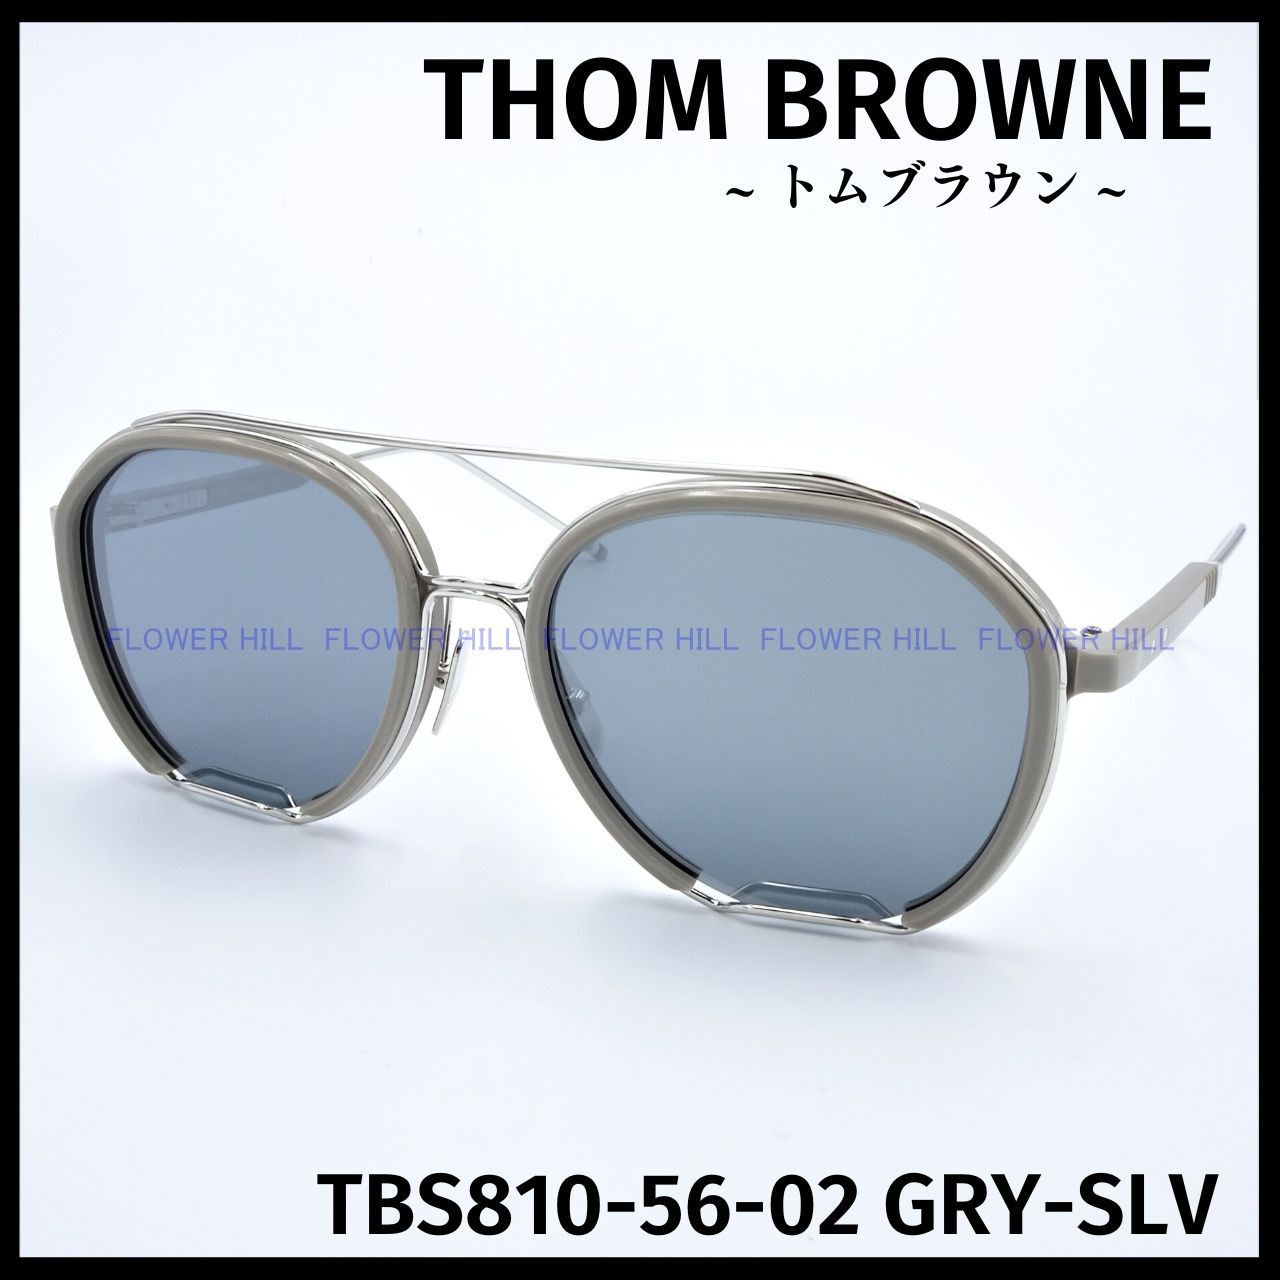 THOM BROWNE トムブラウン サングラス TBS810-56-02 GRY-SLV グレー